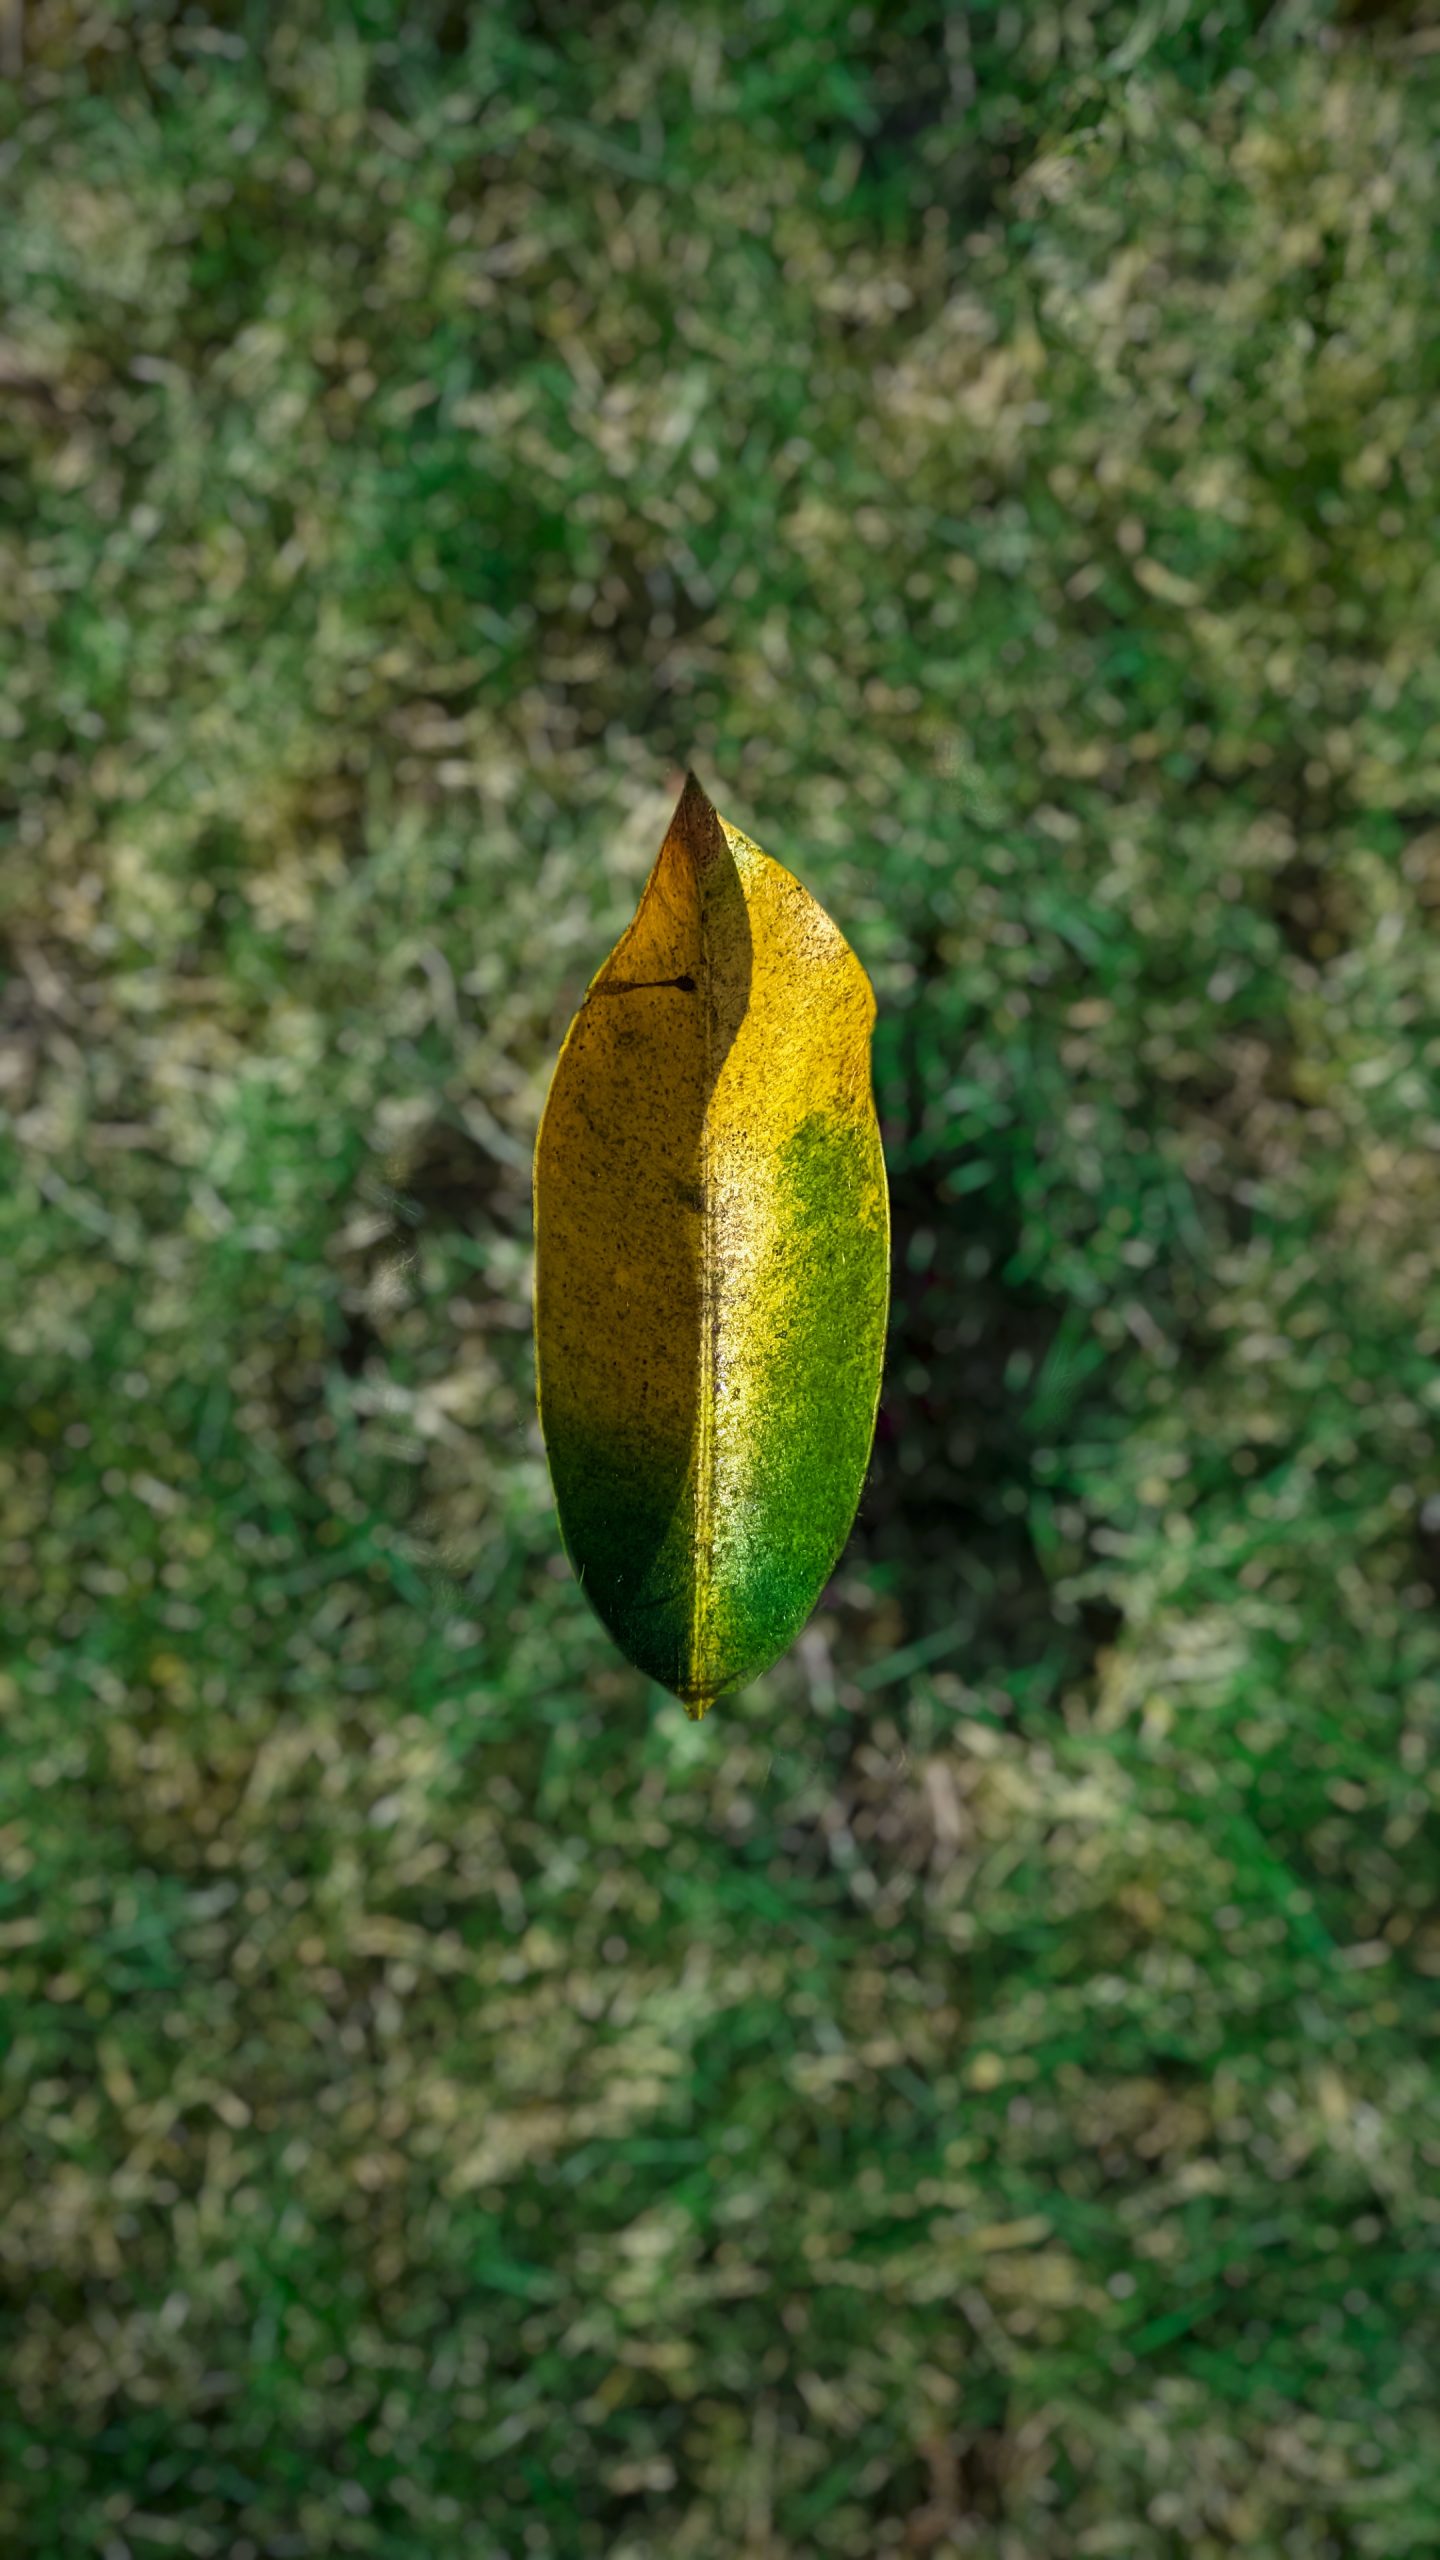 A dead leaf